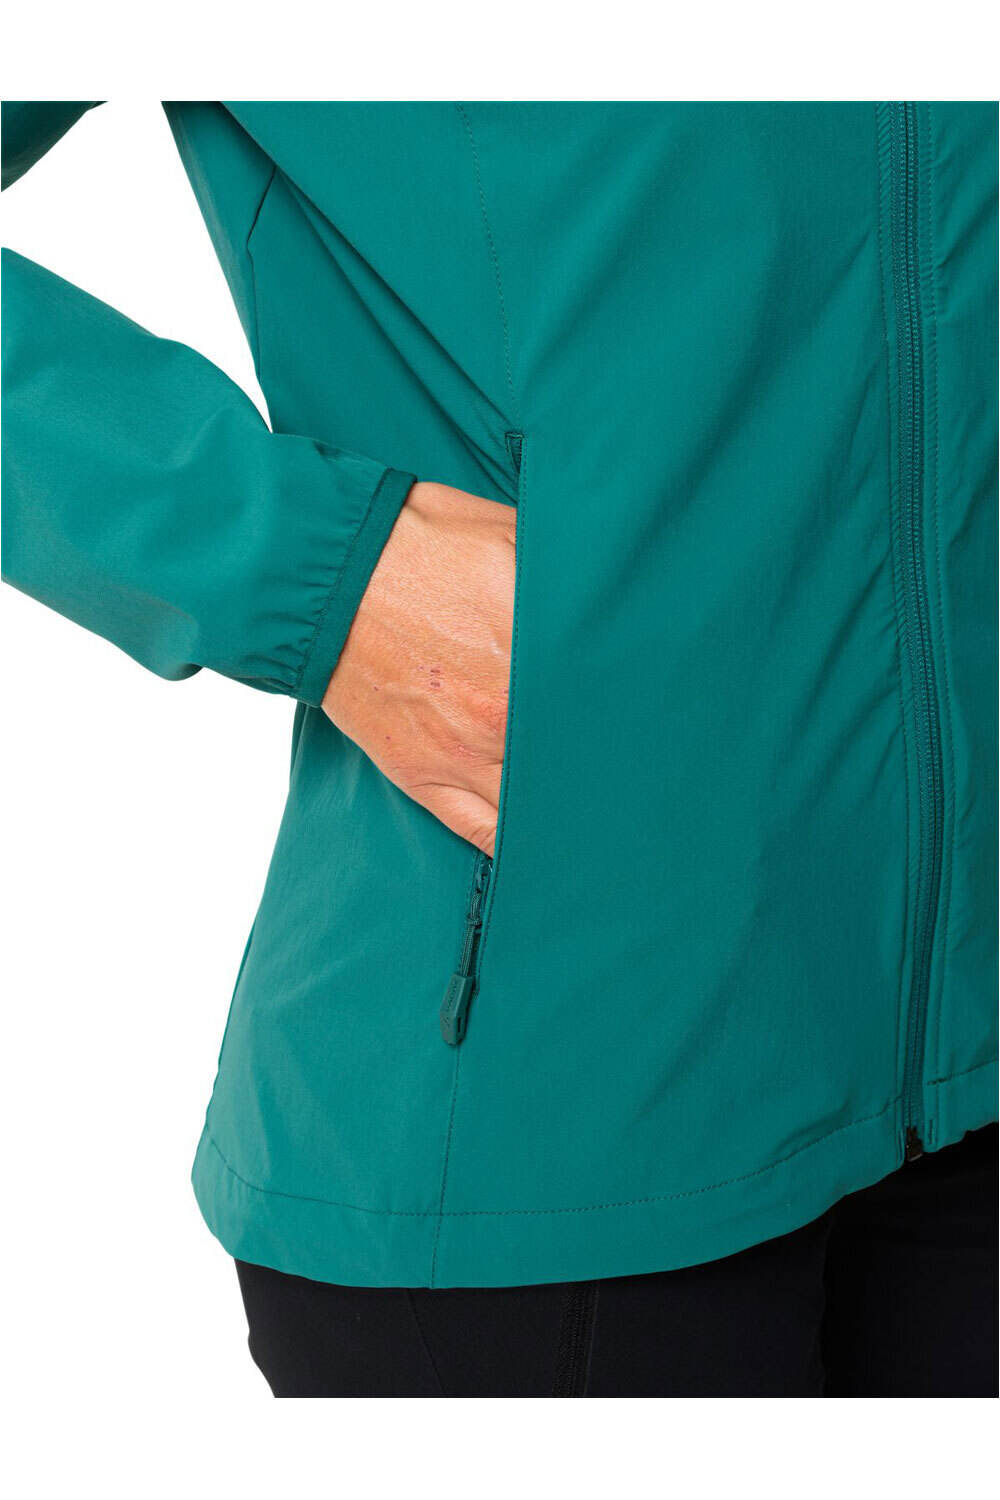 Vaude chaqueta softshell mujer Women's Moab Jacket IV 03